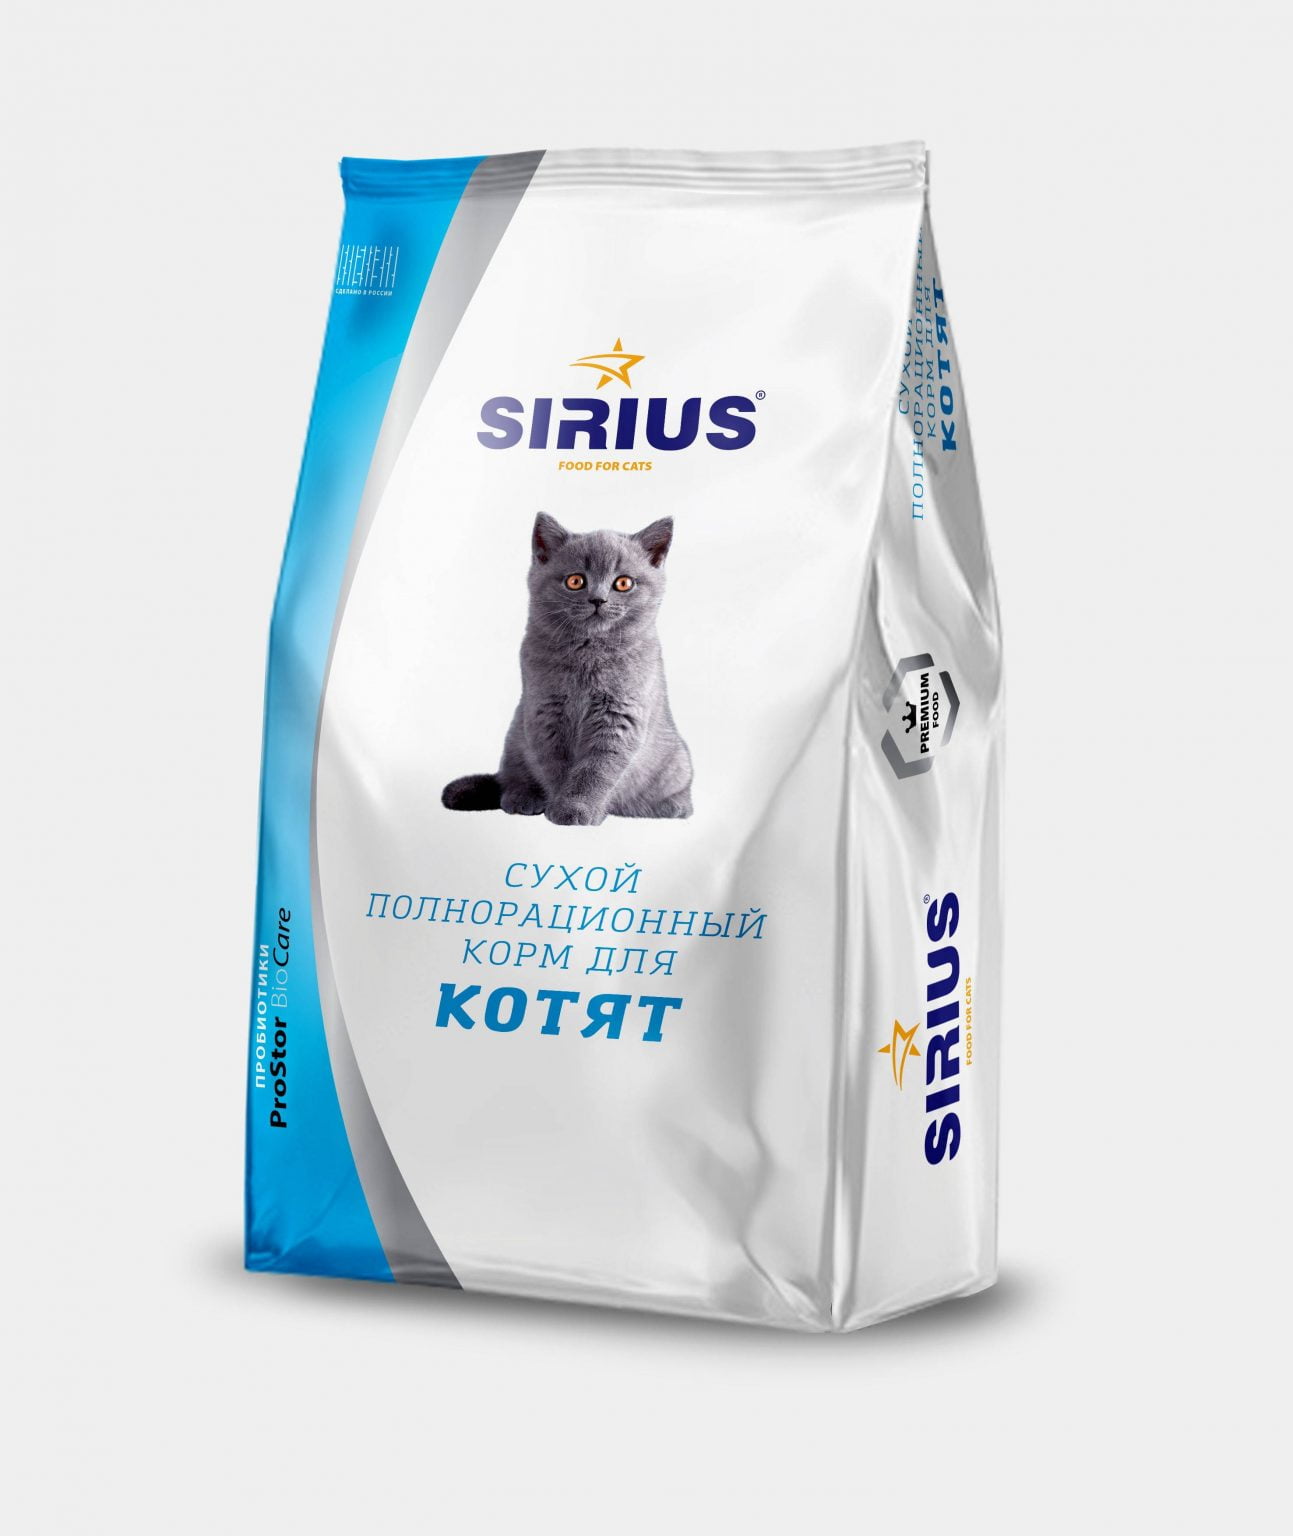 Купить корм премиум класса. Корм Сириус 1,5 кг для кошек. Sirius корм для котят. Сириус сух. Для котят 400гр. Сириус сух. Для котят 1,5кг.